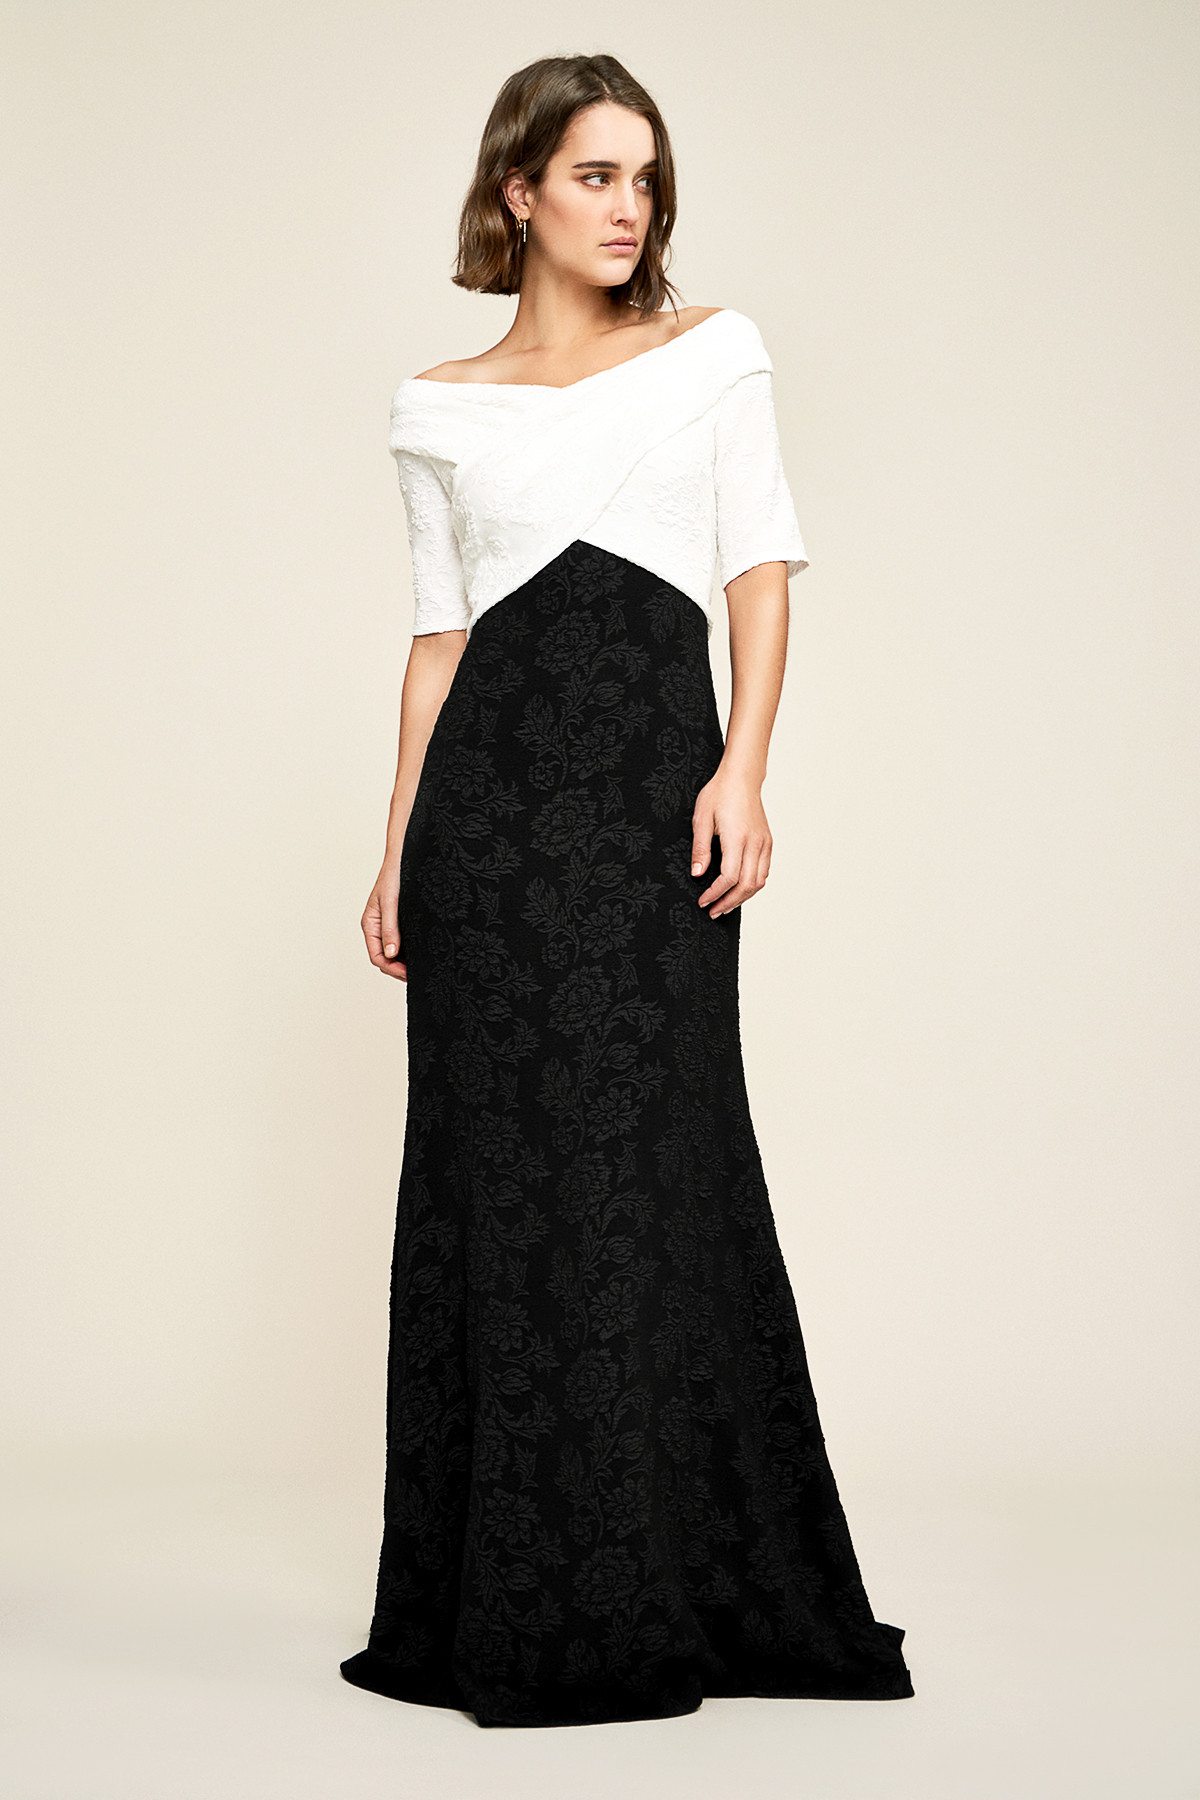 Short haired brunette model posing in elegant white and black contrast crossover bodice Tadashi Shoji gown